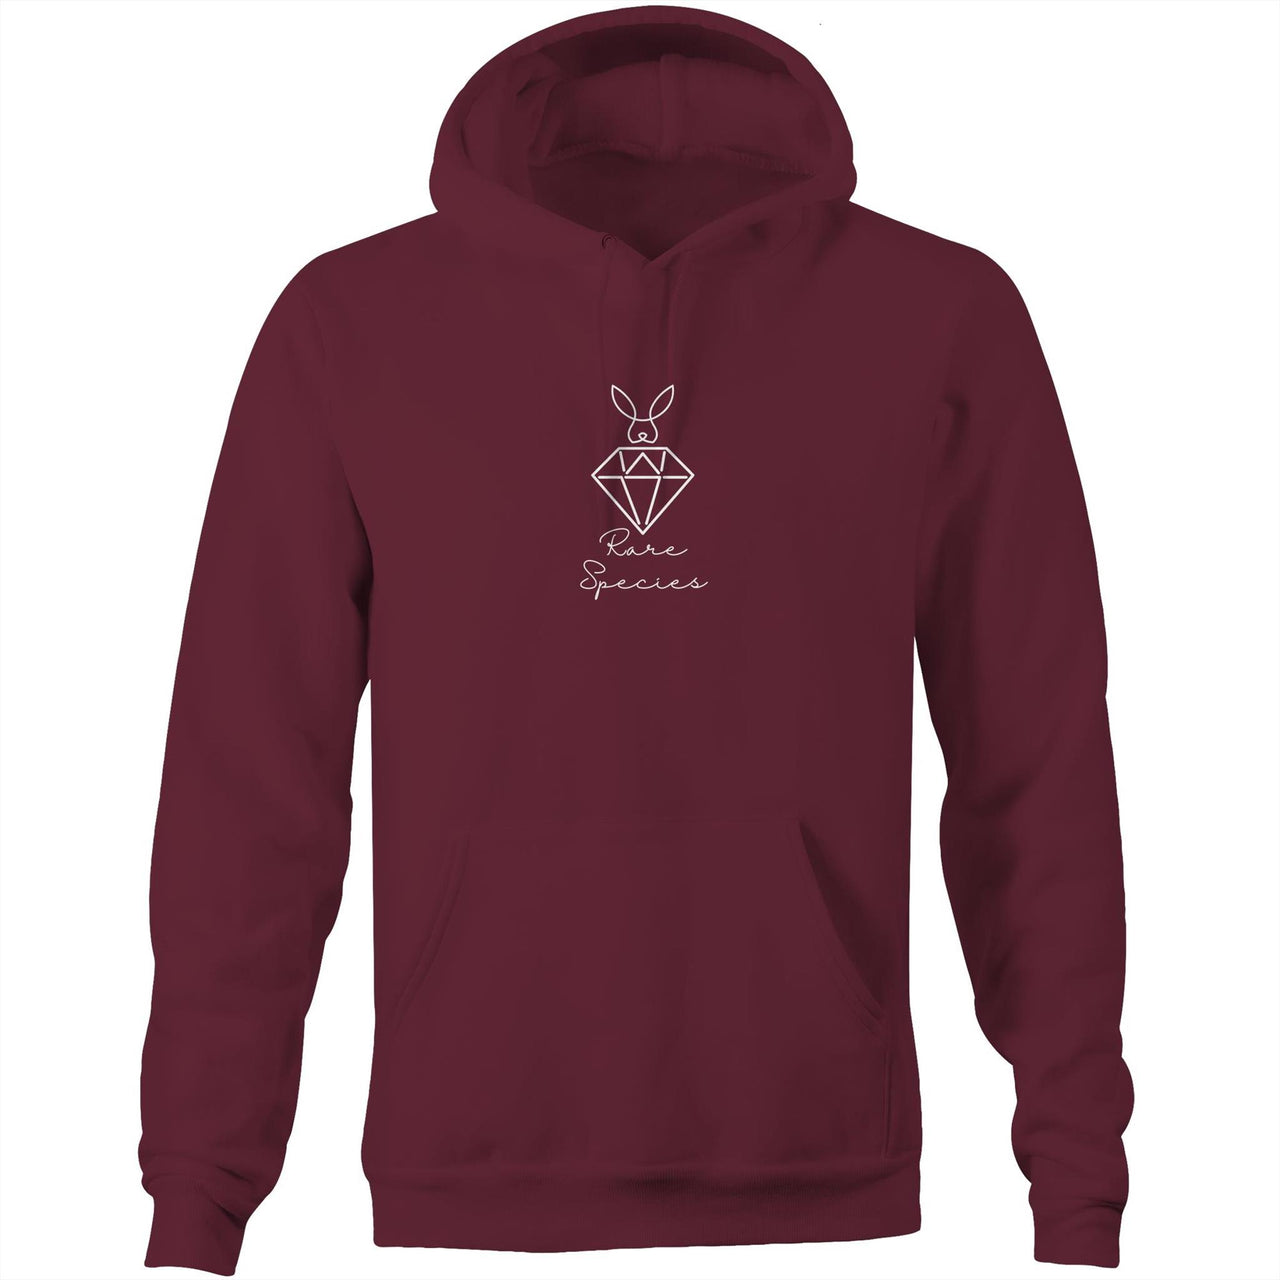 CBF Rare Species Pocket Hoodie Sweatshirt Burgundy by CBF Clothing